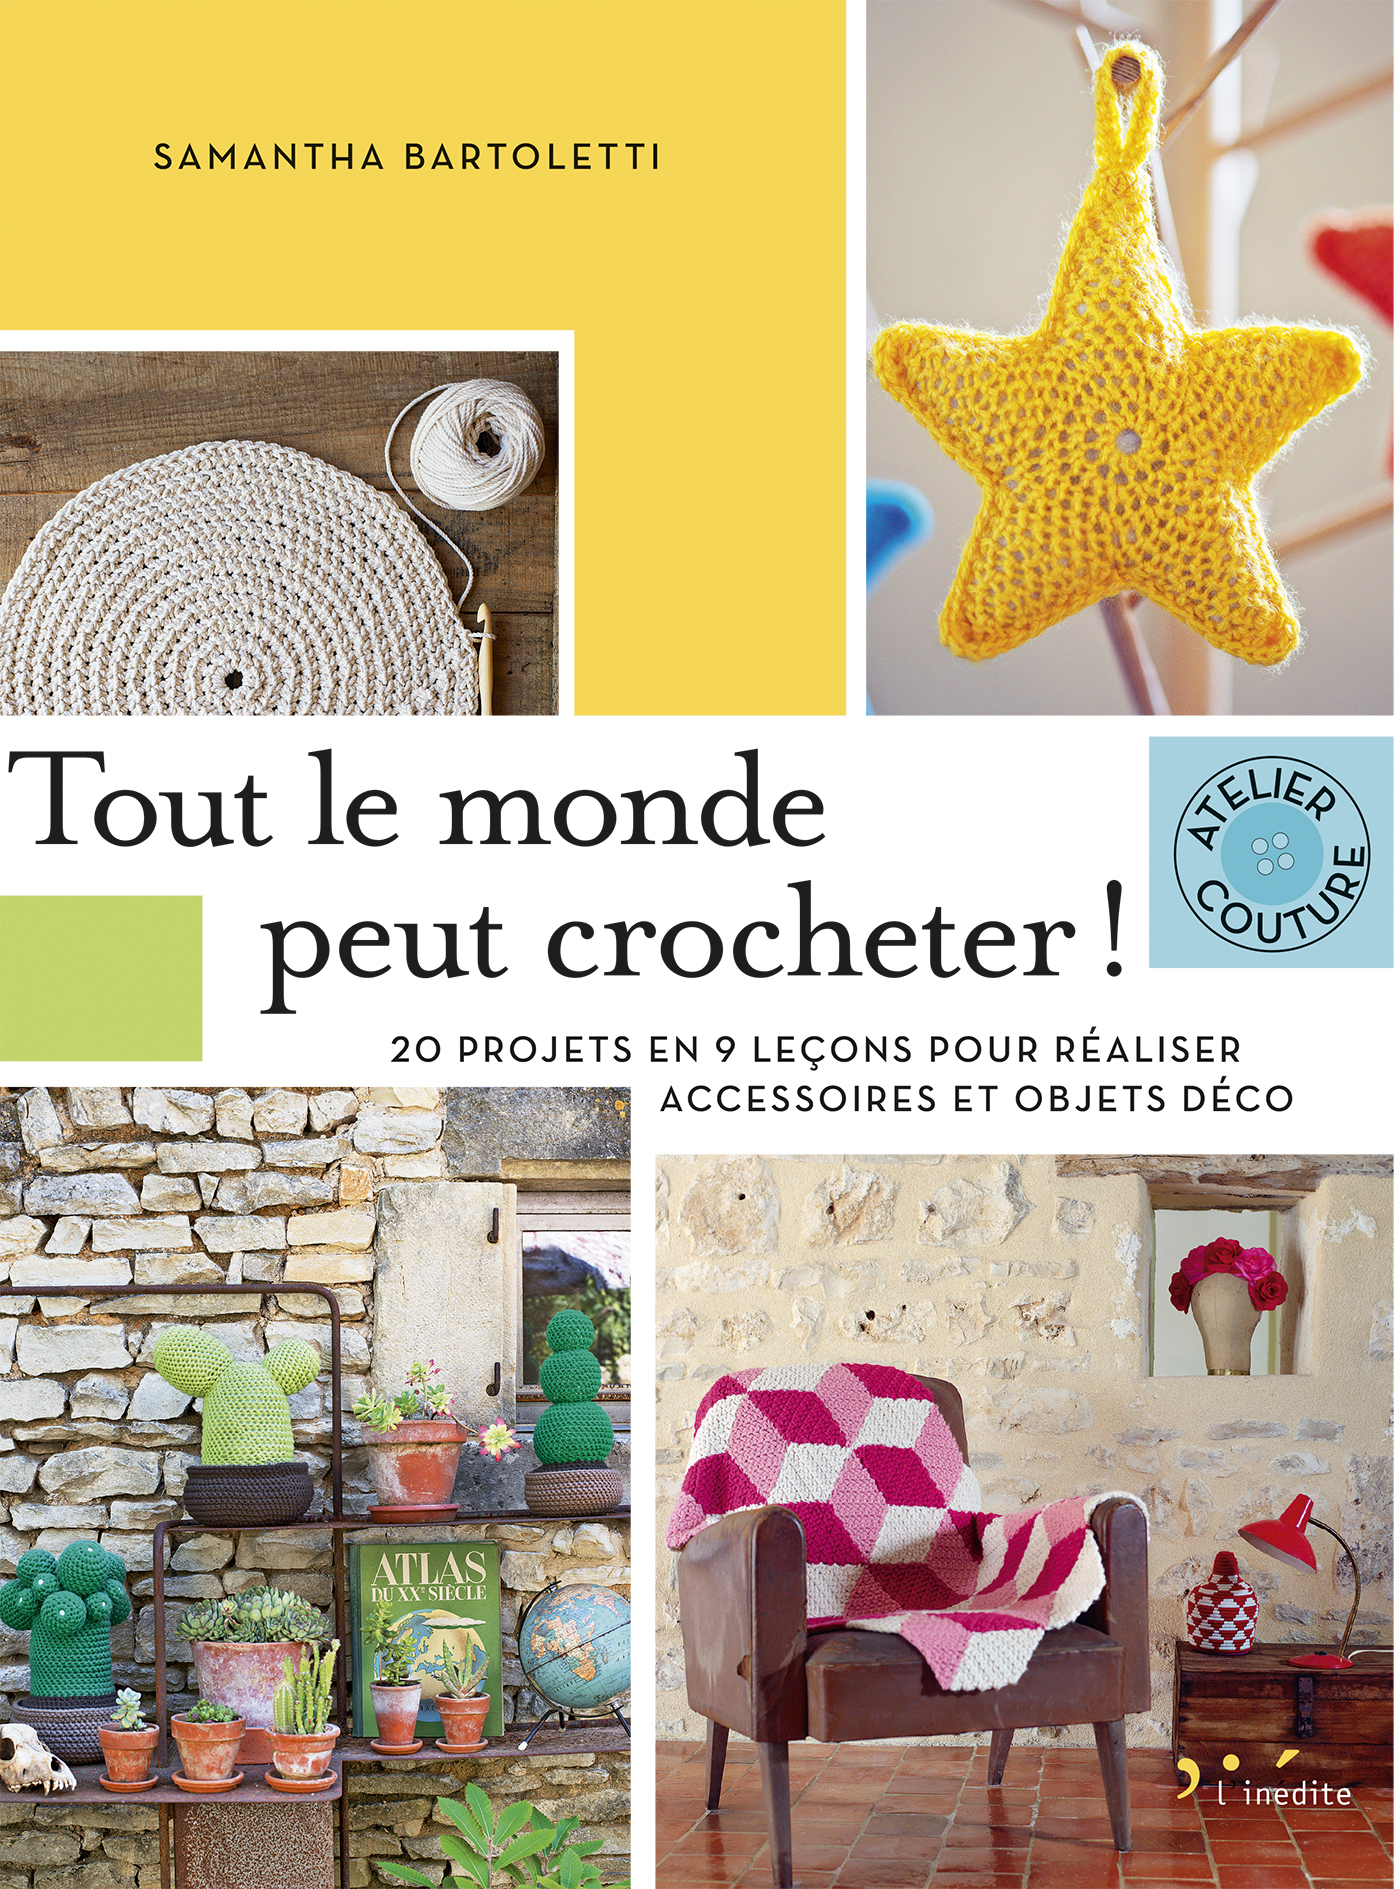 Chaussons animaux au crochet Ebook -  France